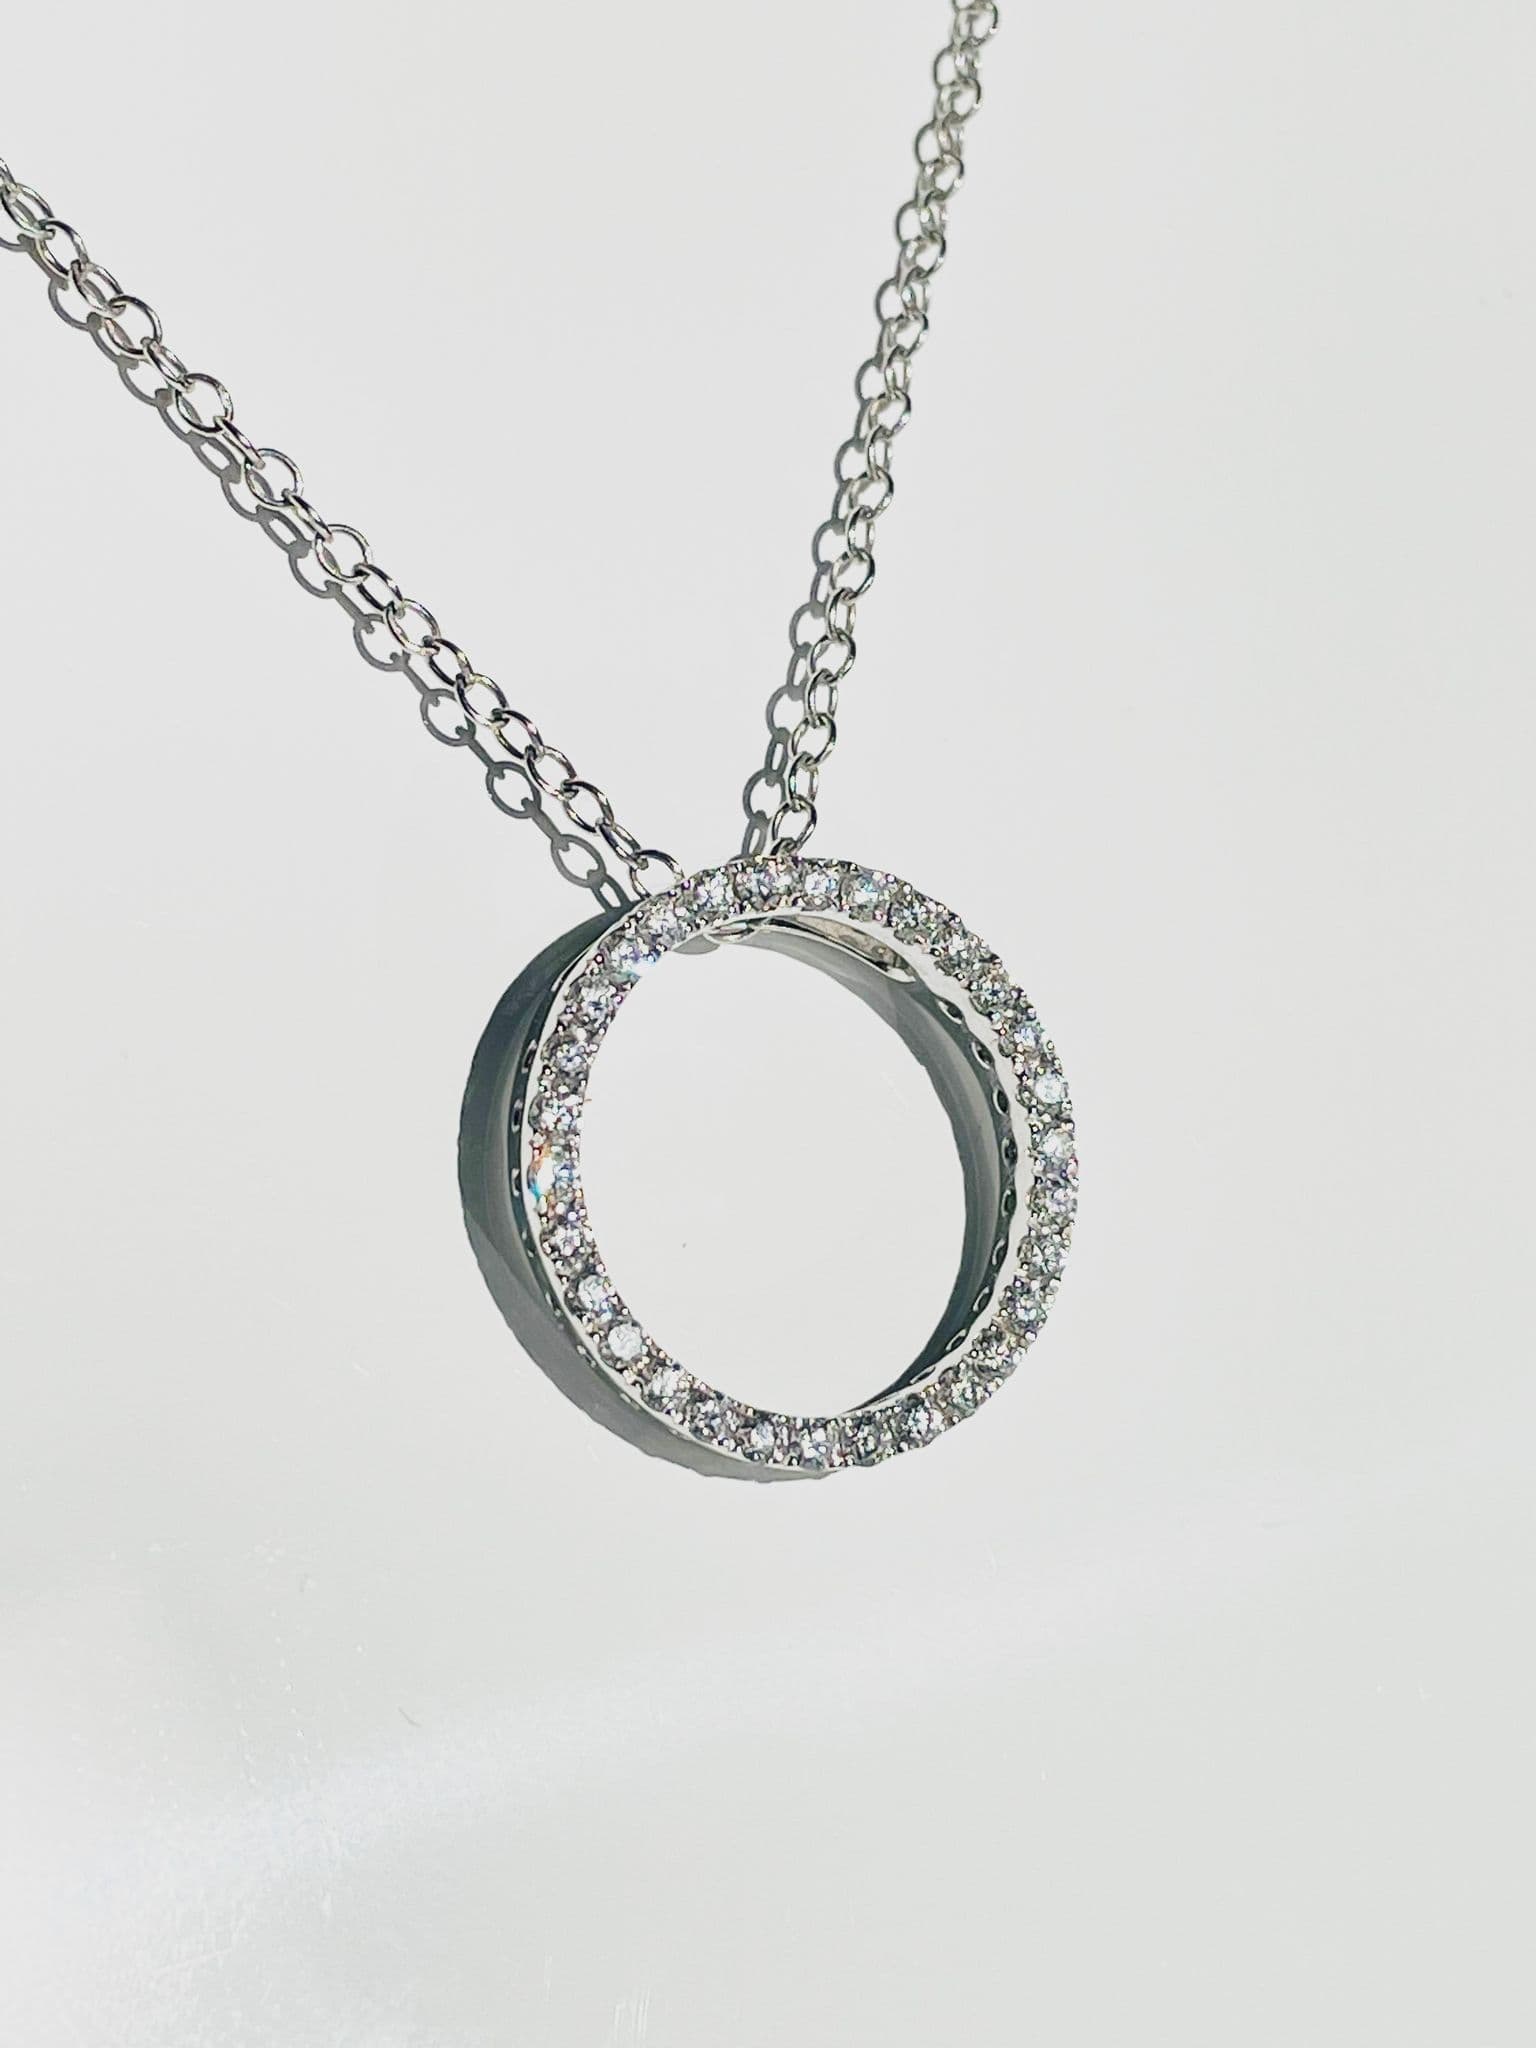 Half carat diamond round circle necklace pendant